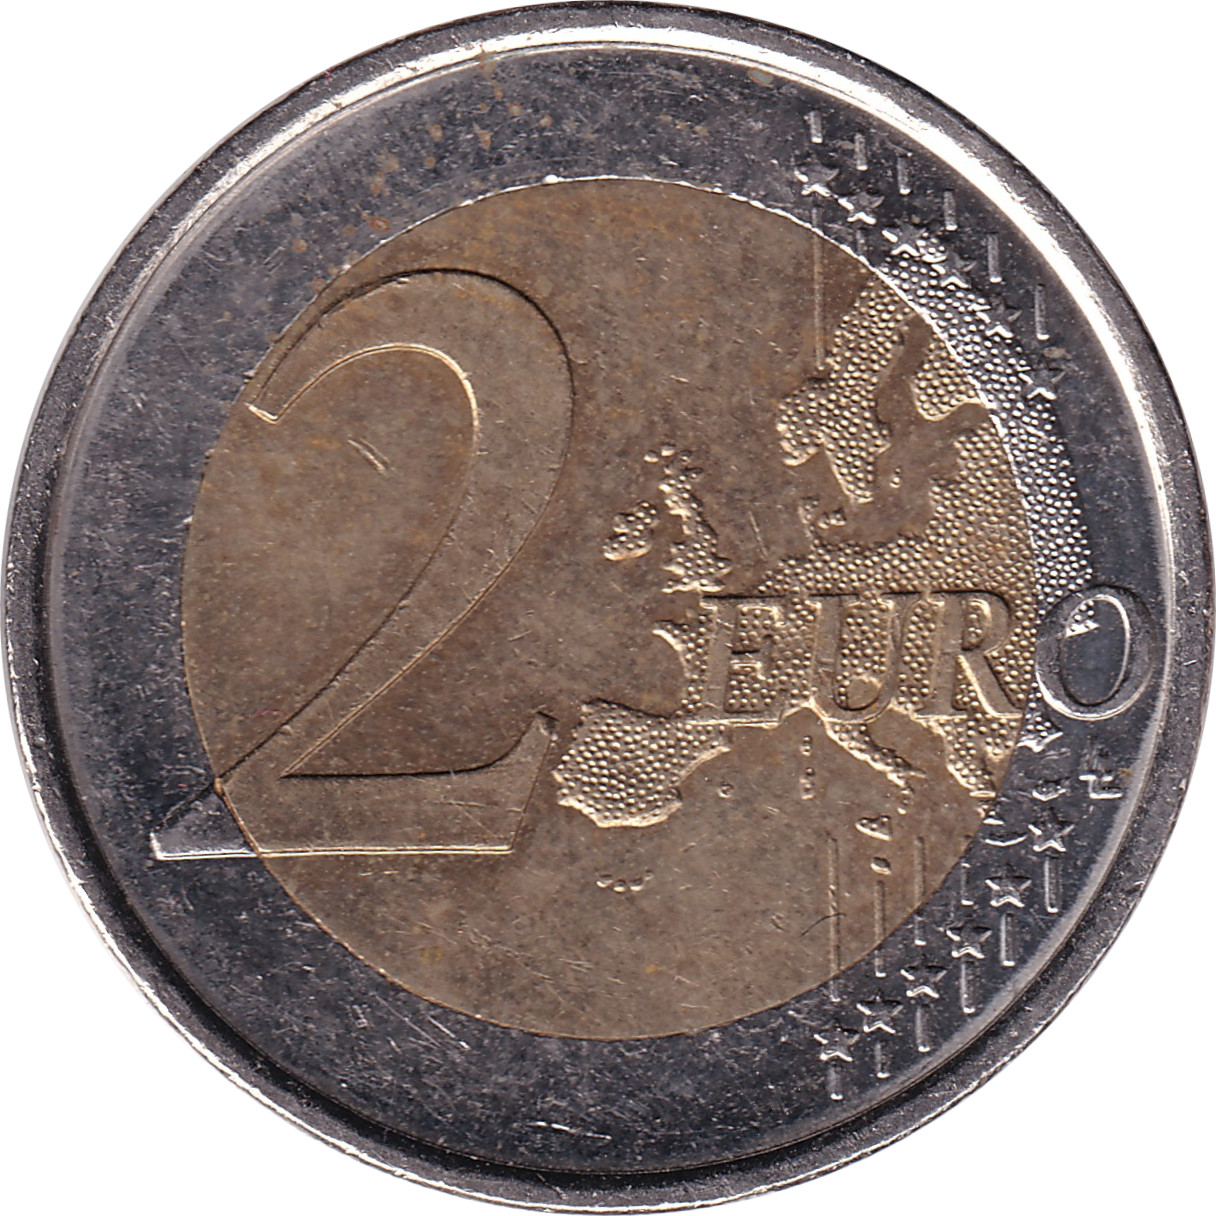 2 euro - Drapeau européen - Espagne